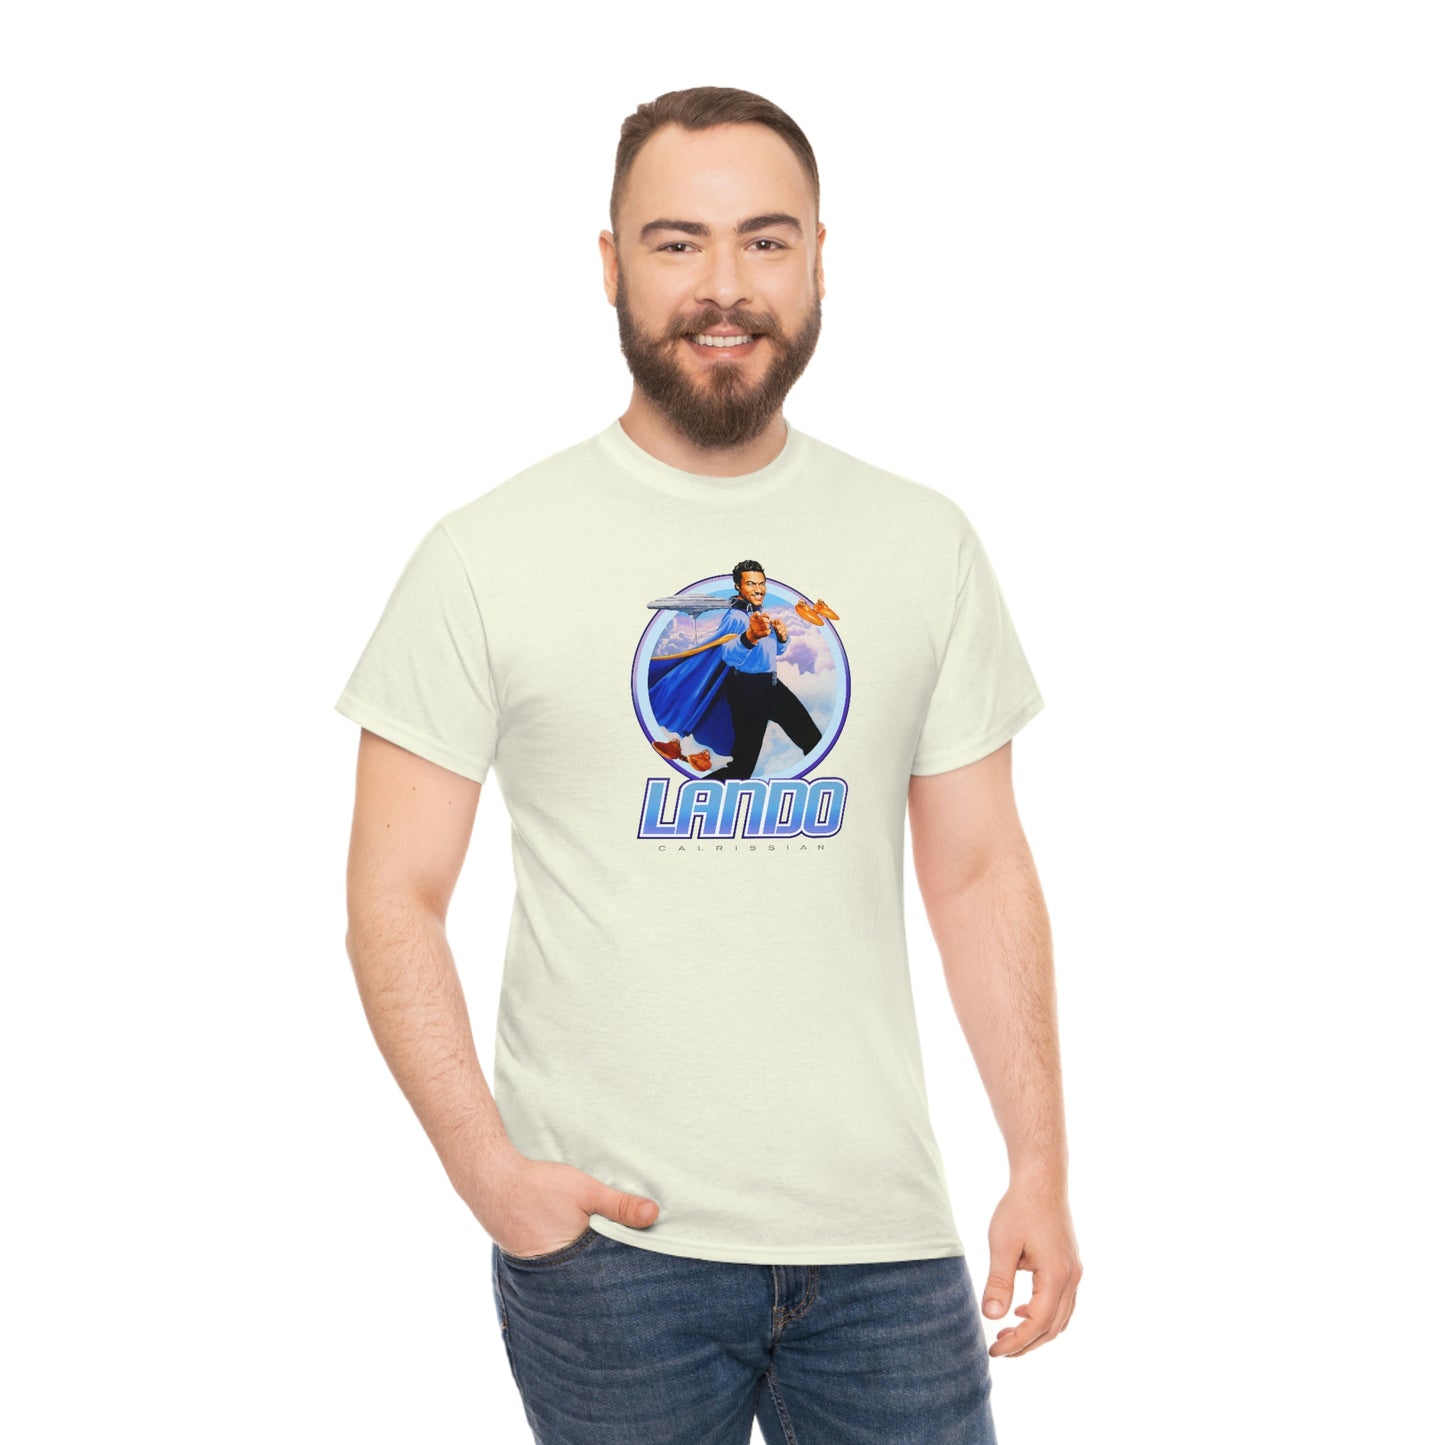 Lando Calrissian T-Shirt